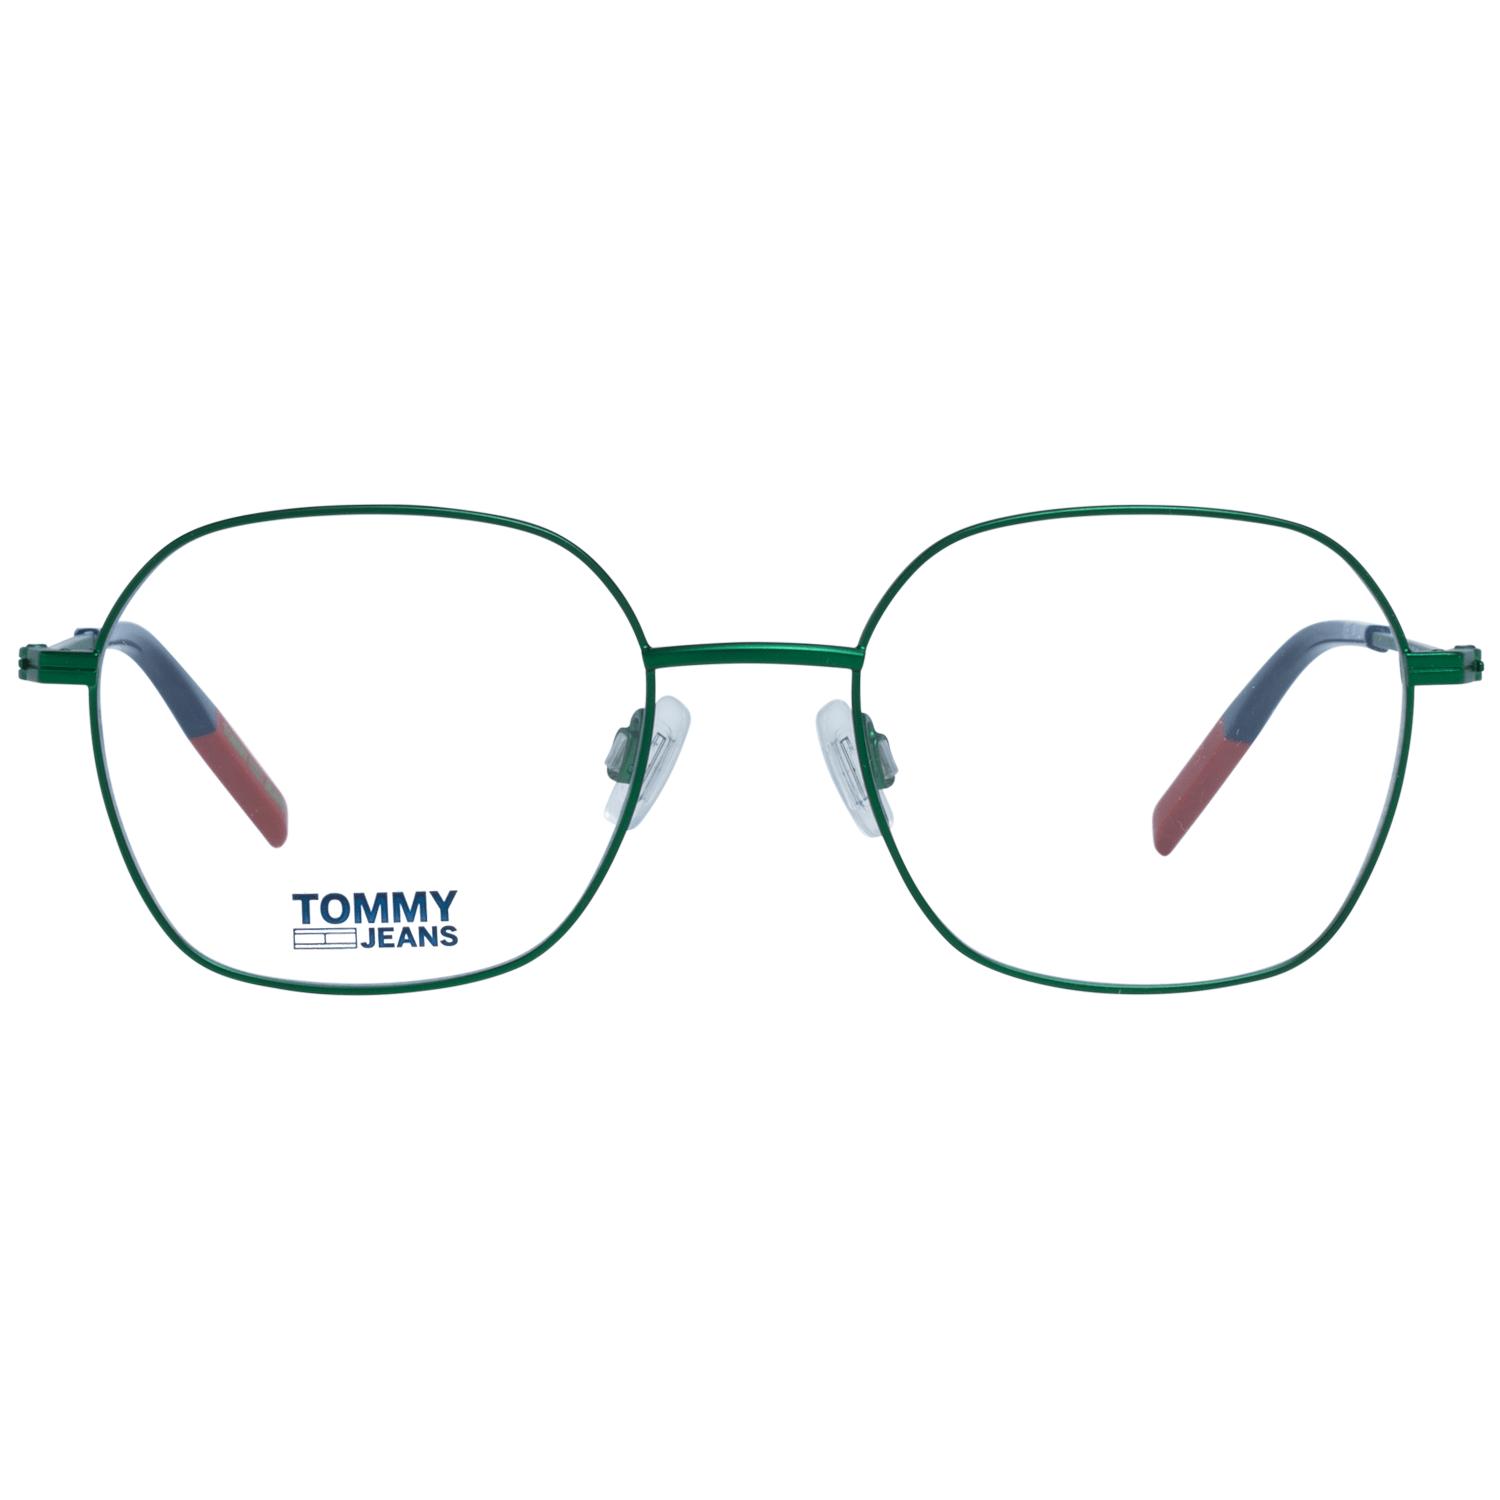 Tommy Hilfiger Green Unisex Optical Frames in Metallic | Lyst